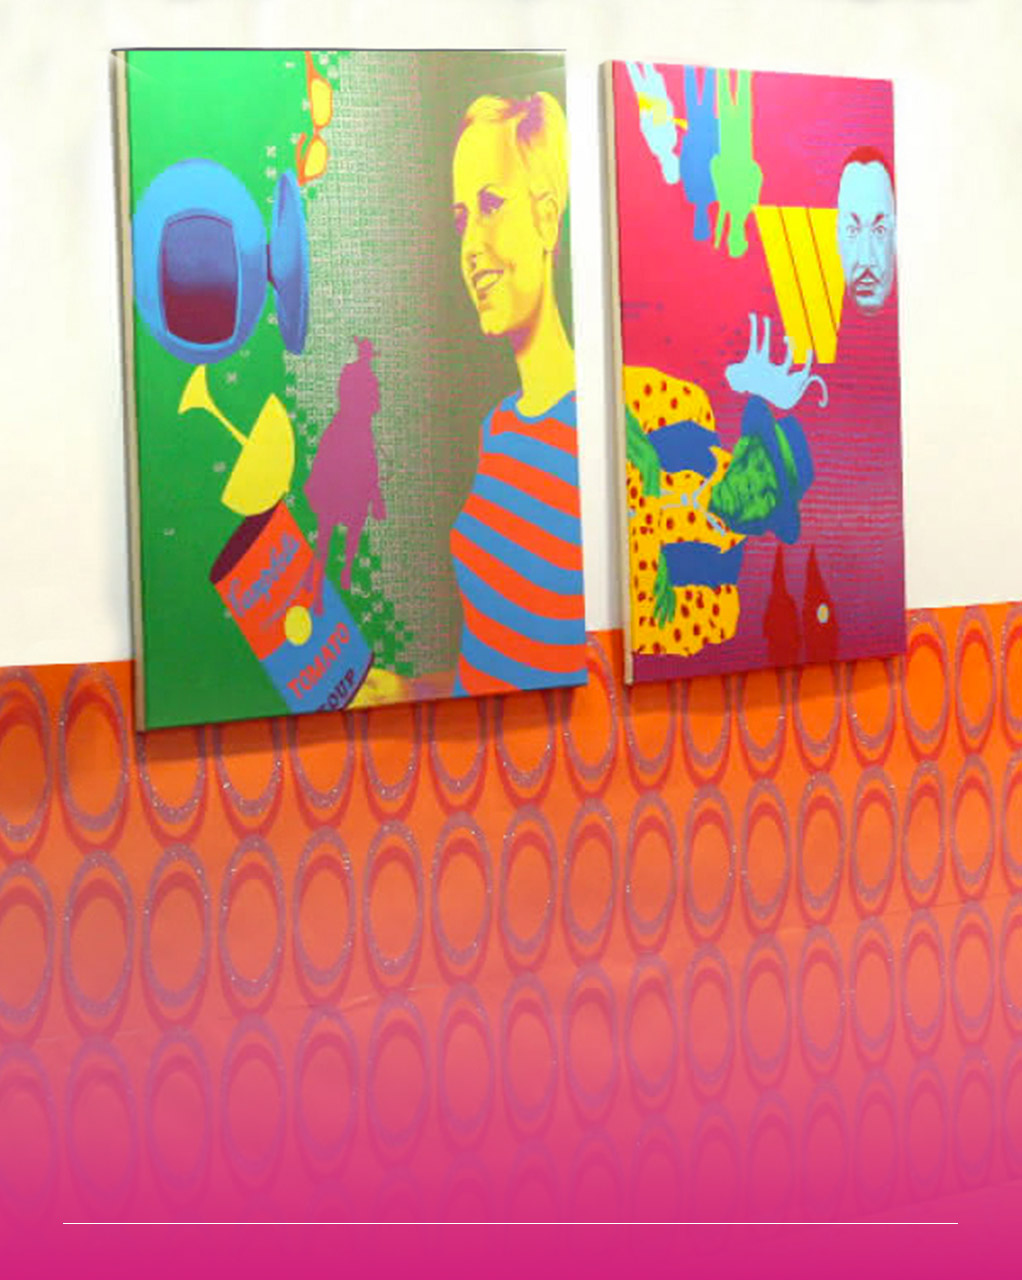 Immagine di due dipinti in stile pop su una parete